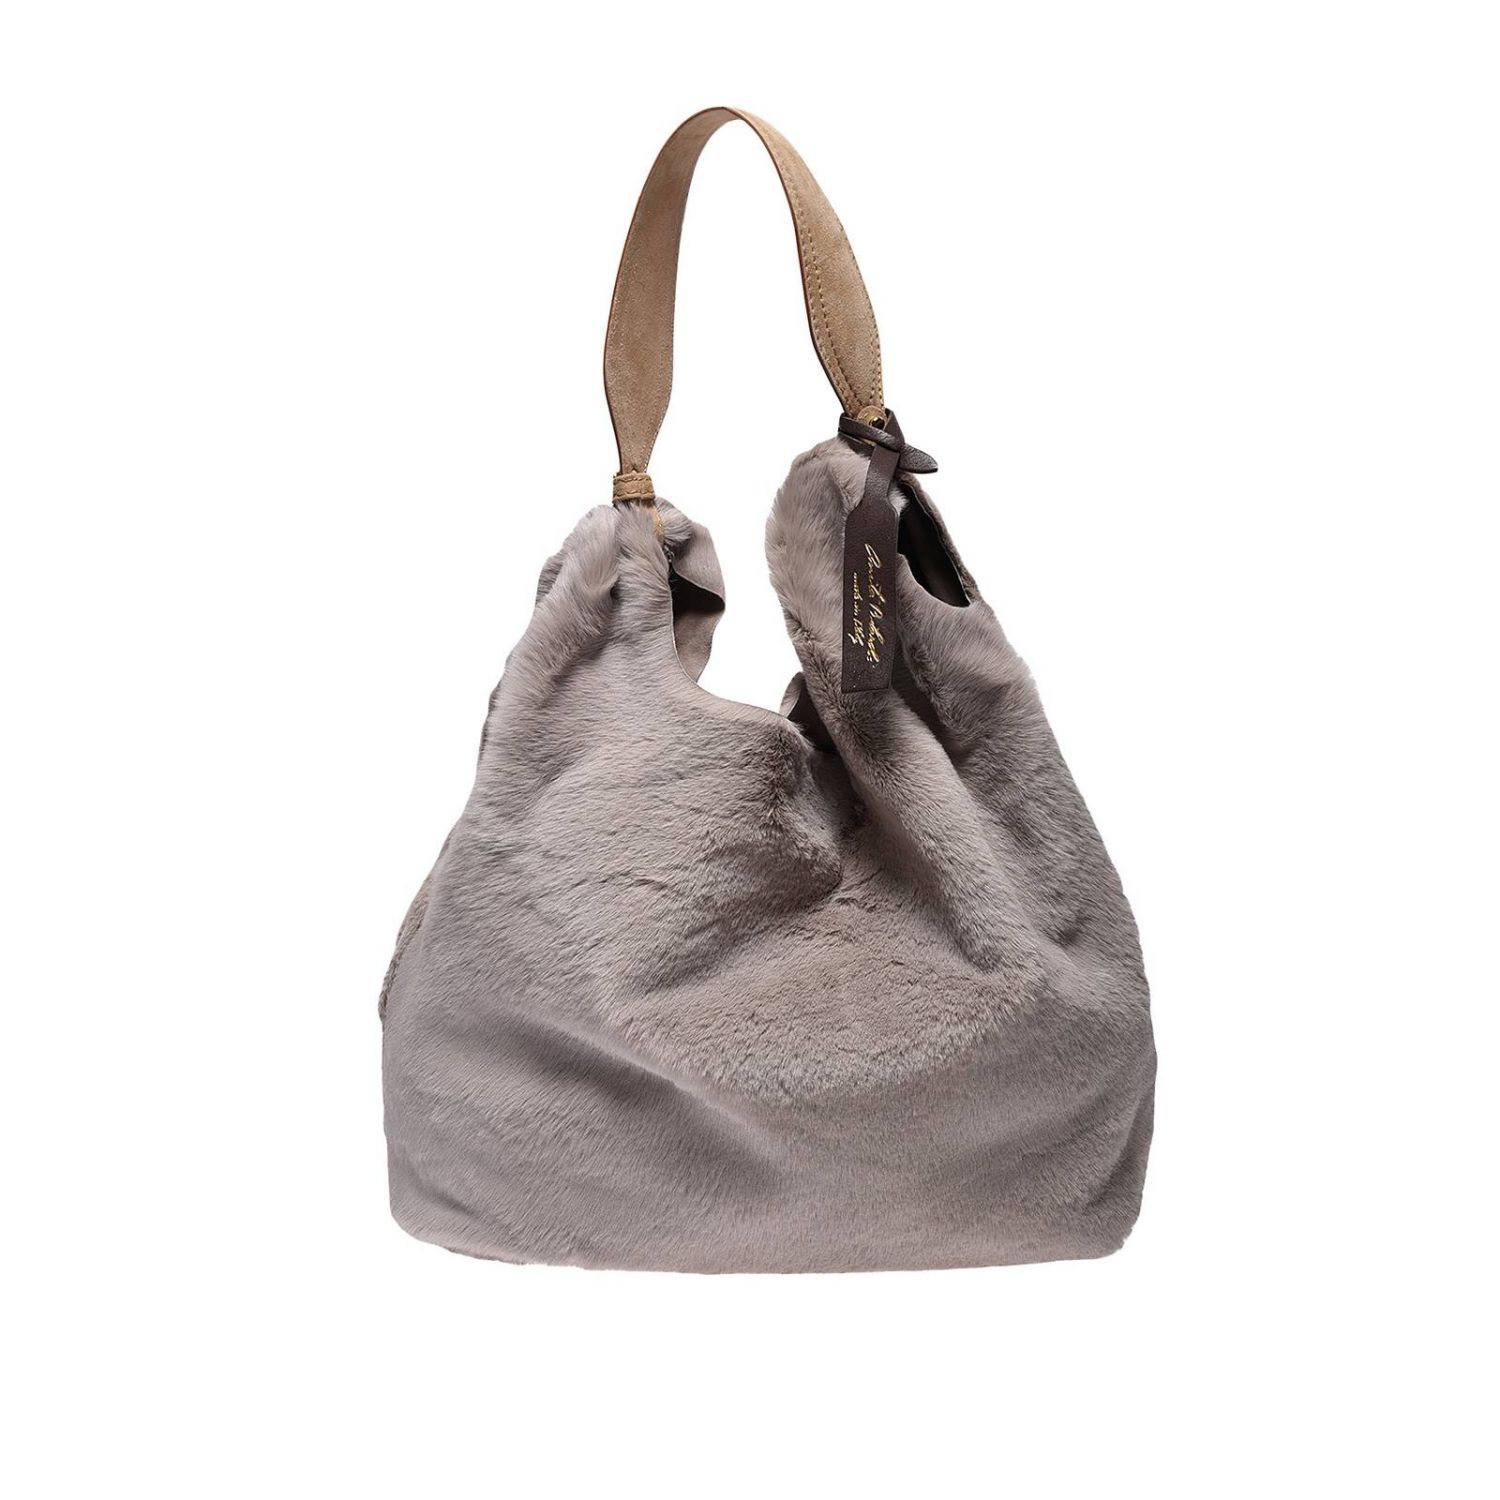 Anita Bilardi Outlet: Shoulder bag women | Shoulder Bag Anita Bilardi ...